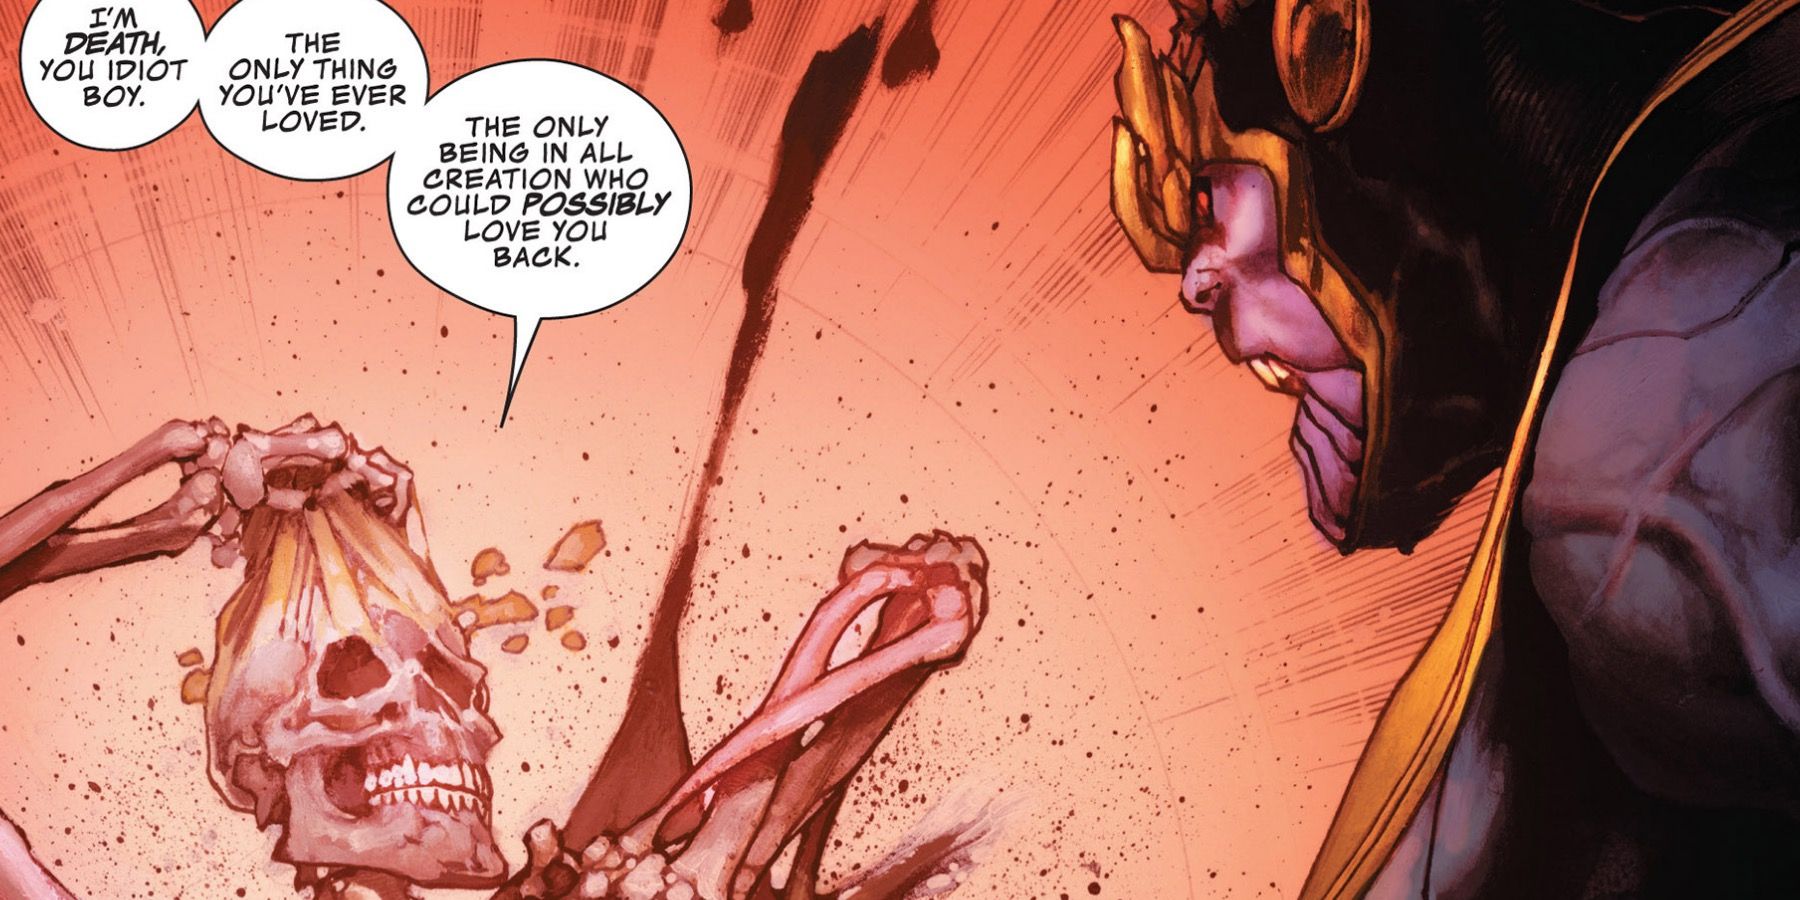 Thanos Marvel Comics